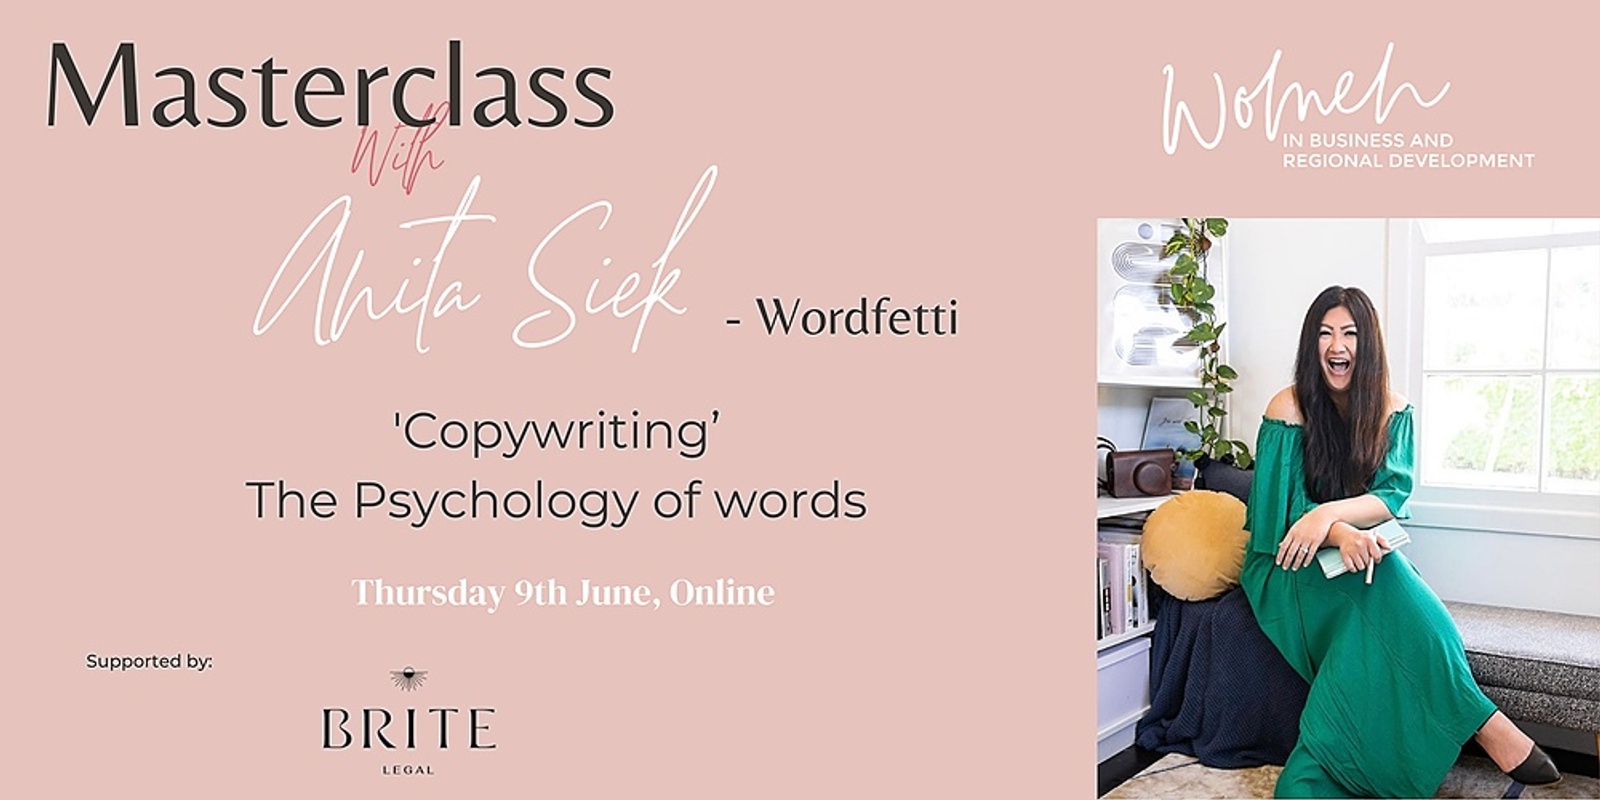 WiBRD MasterClass: Copywriting - The Psychology of Words, with Anita Siek of Wordfetti